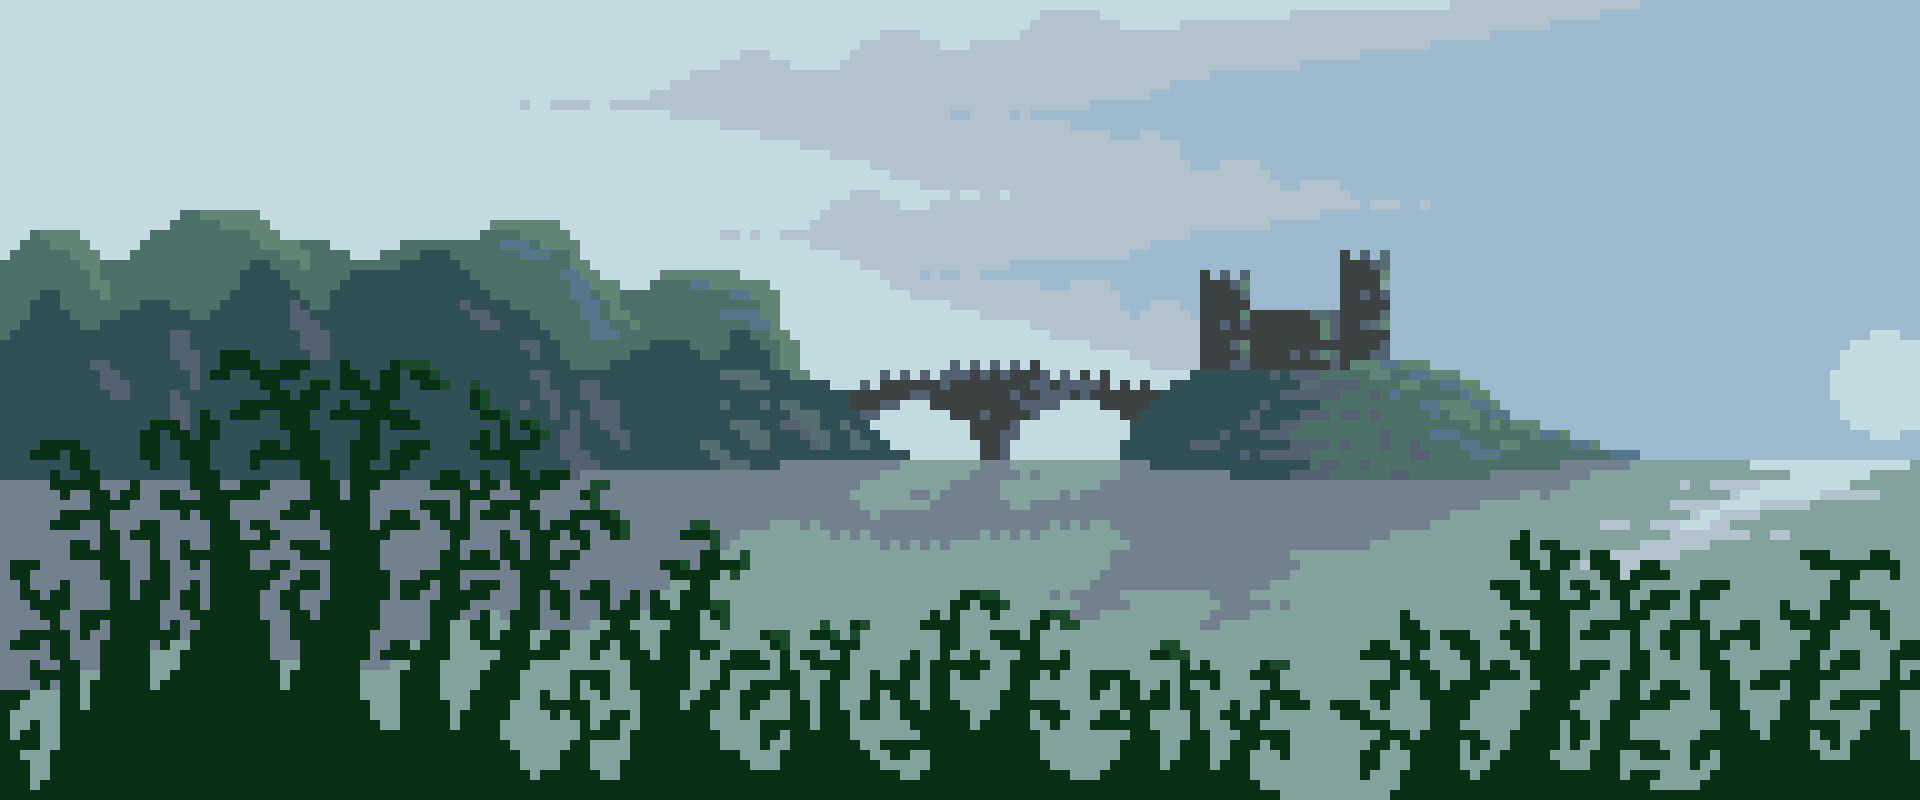 Castle Pixel Art Wallpapers